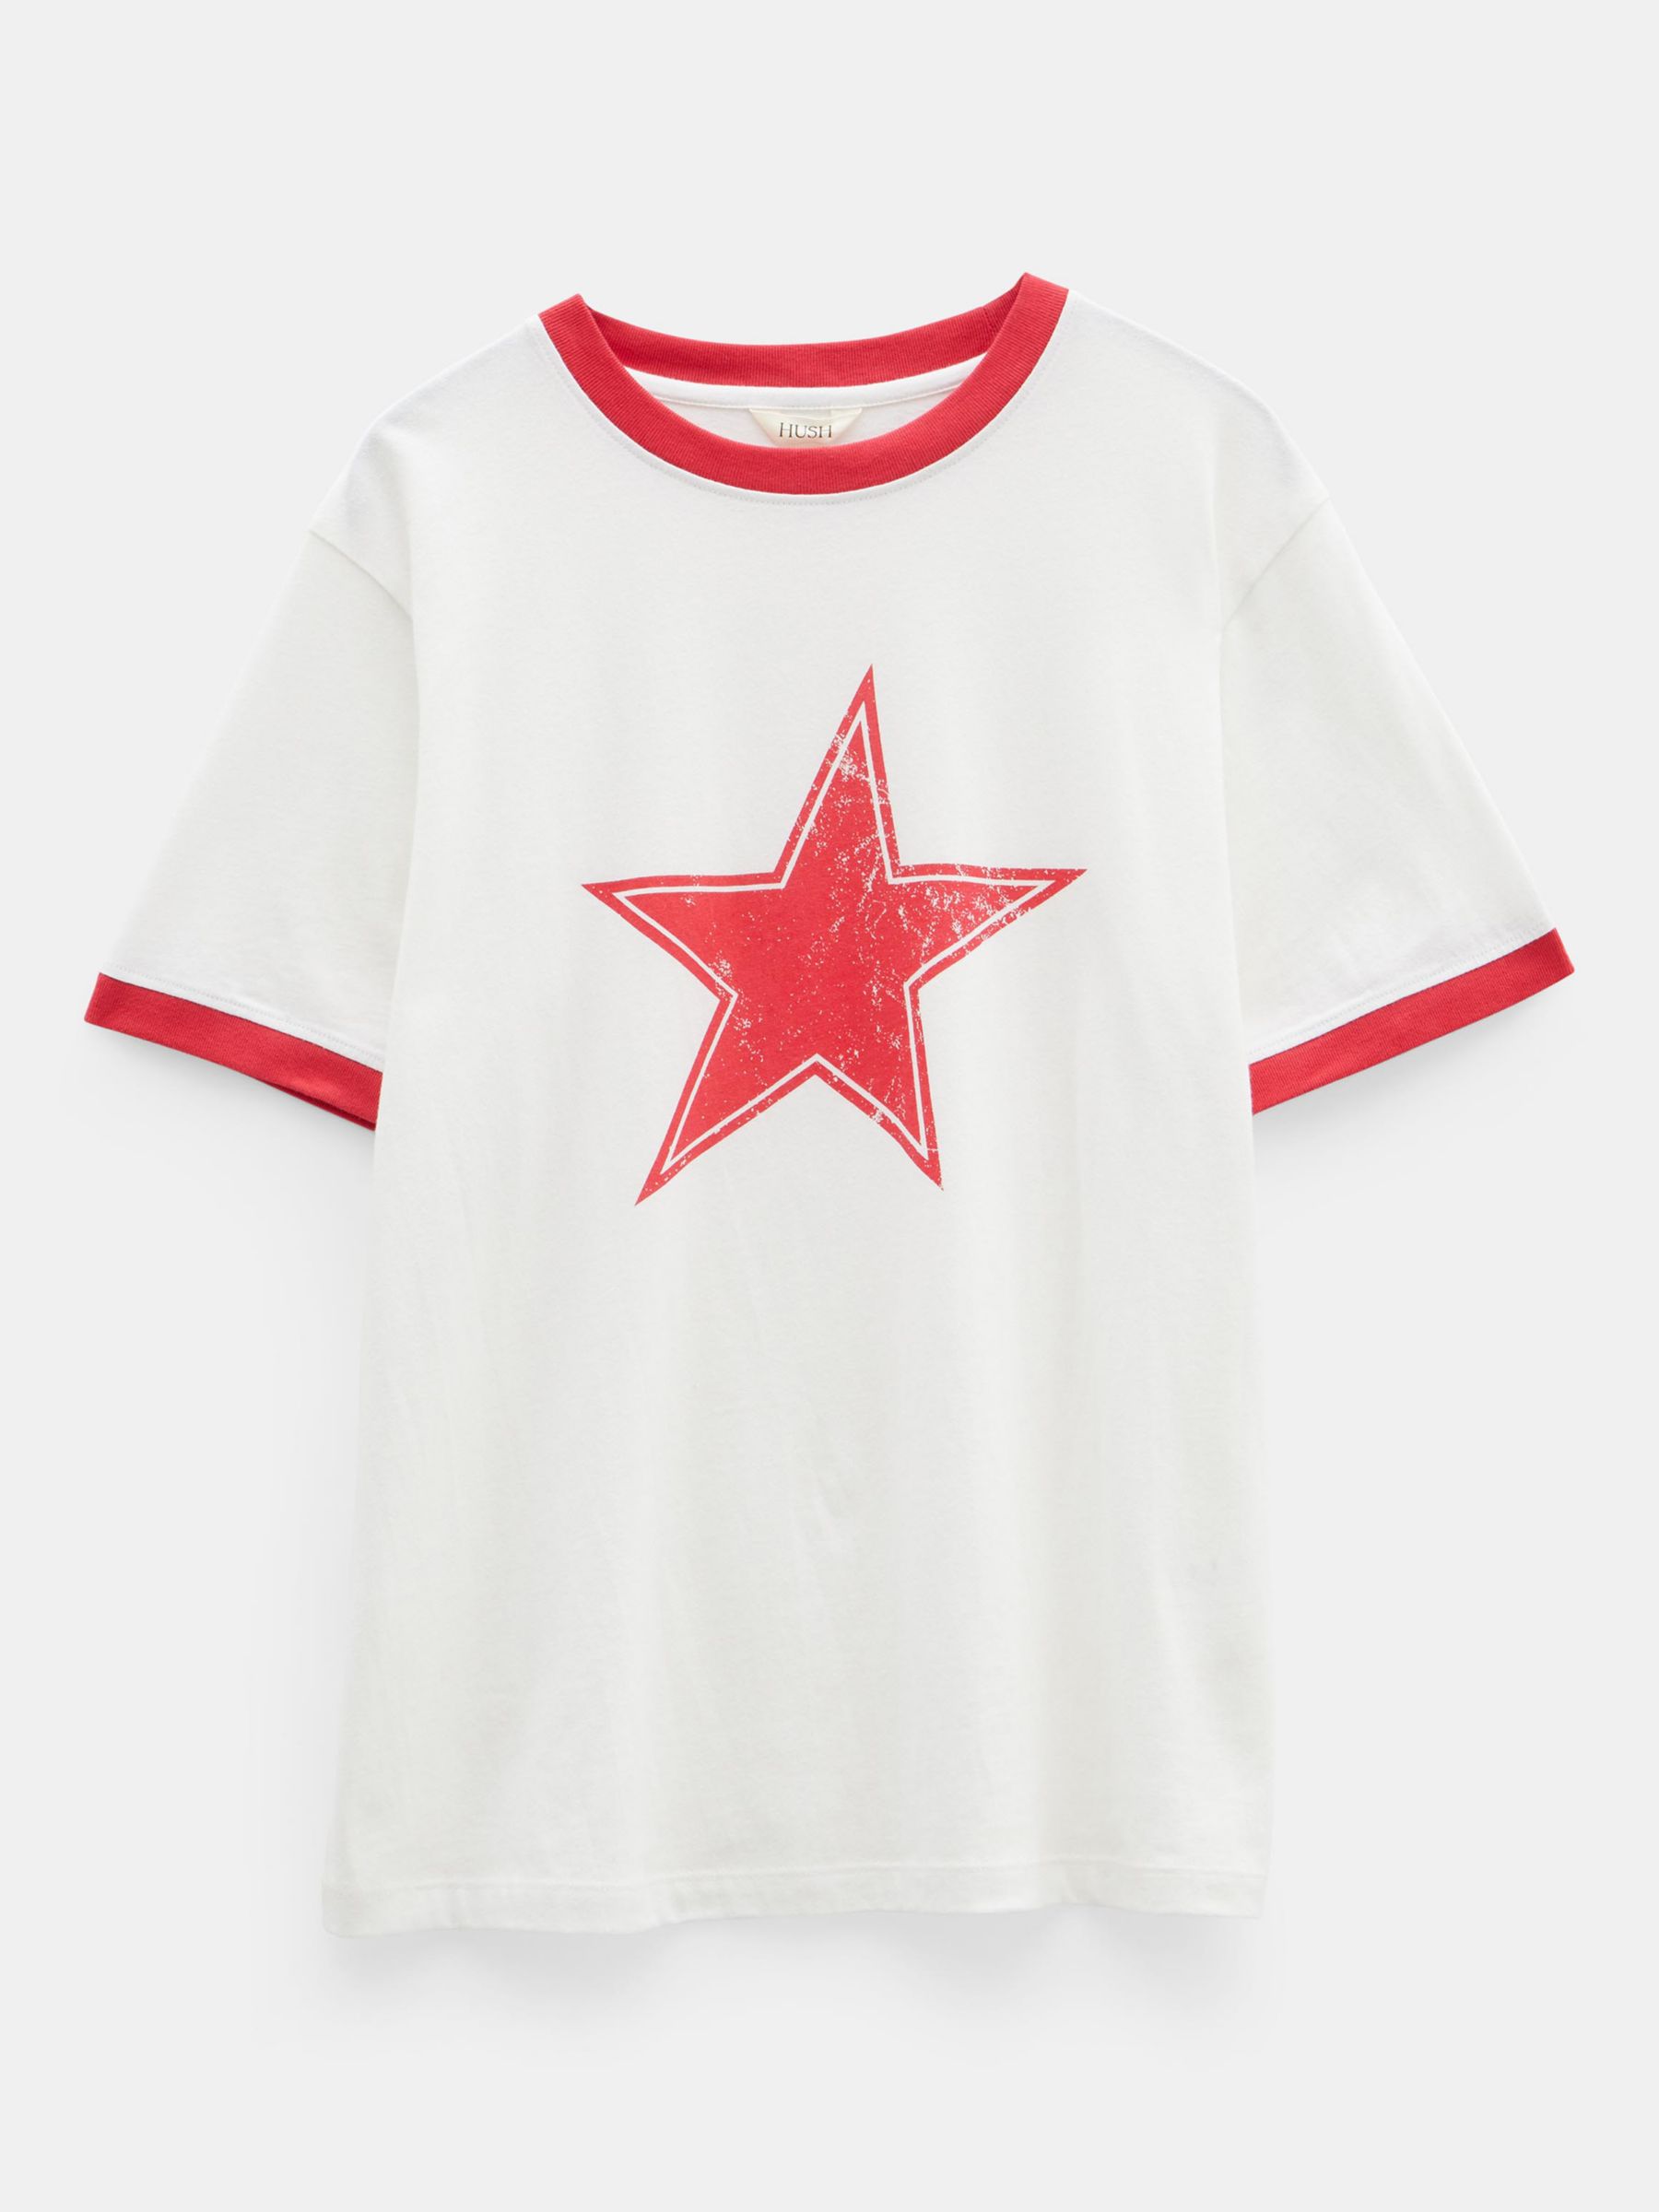 HUSH Shaan Star Ringer Cotton T-Shirt, White/Red, M